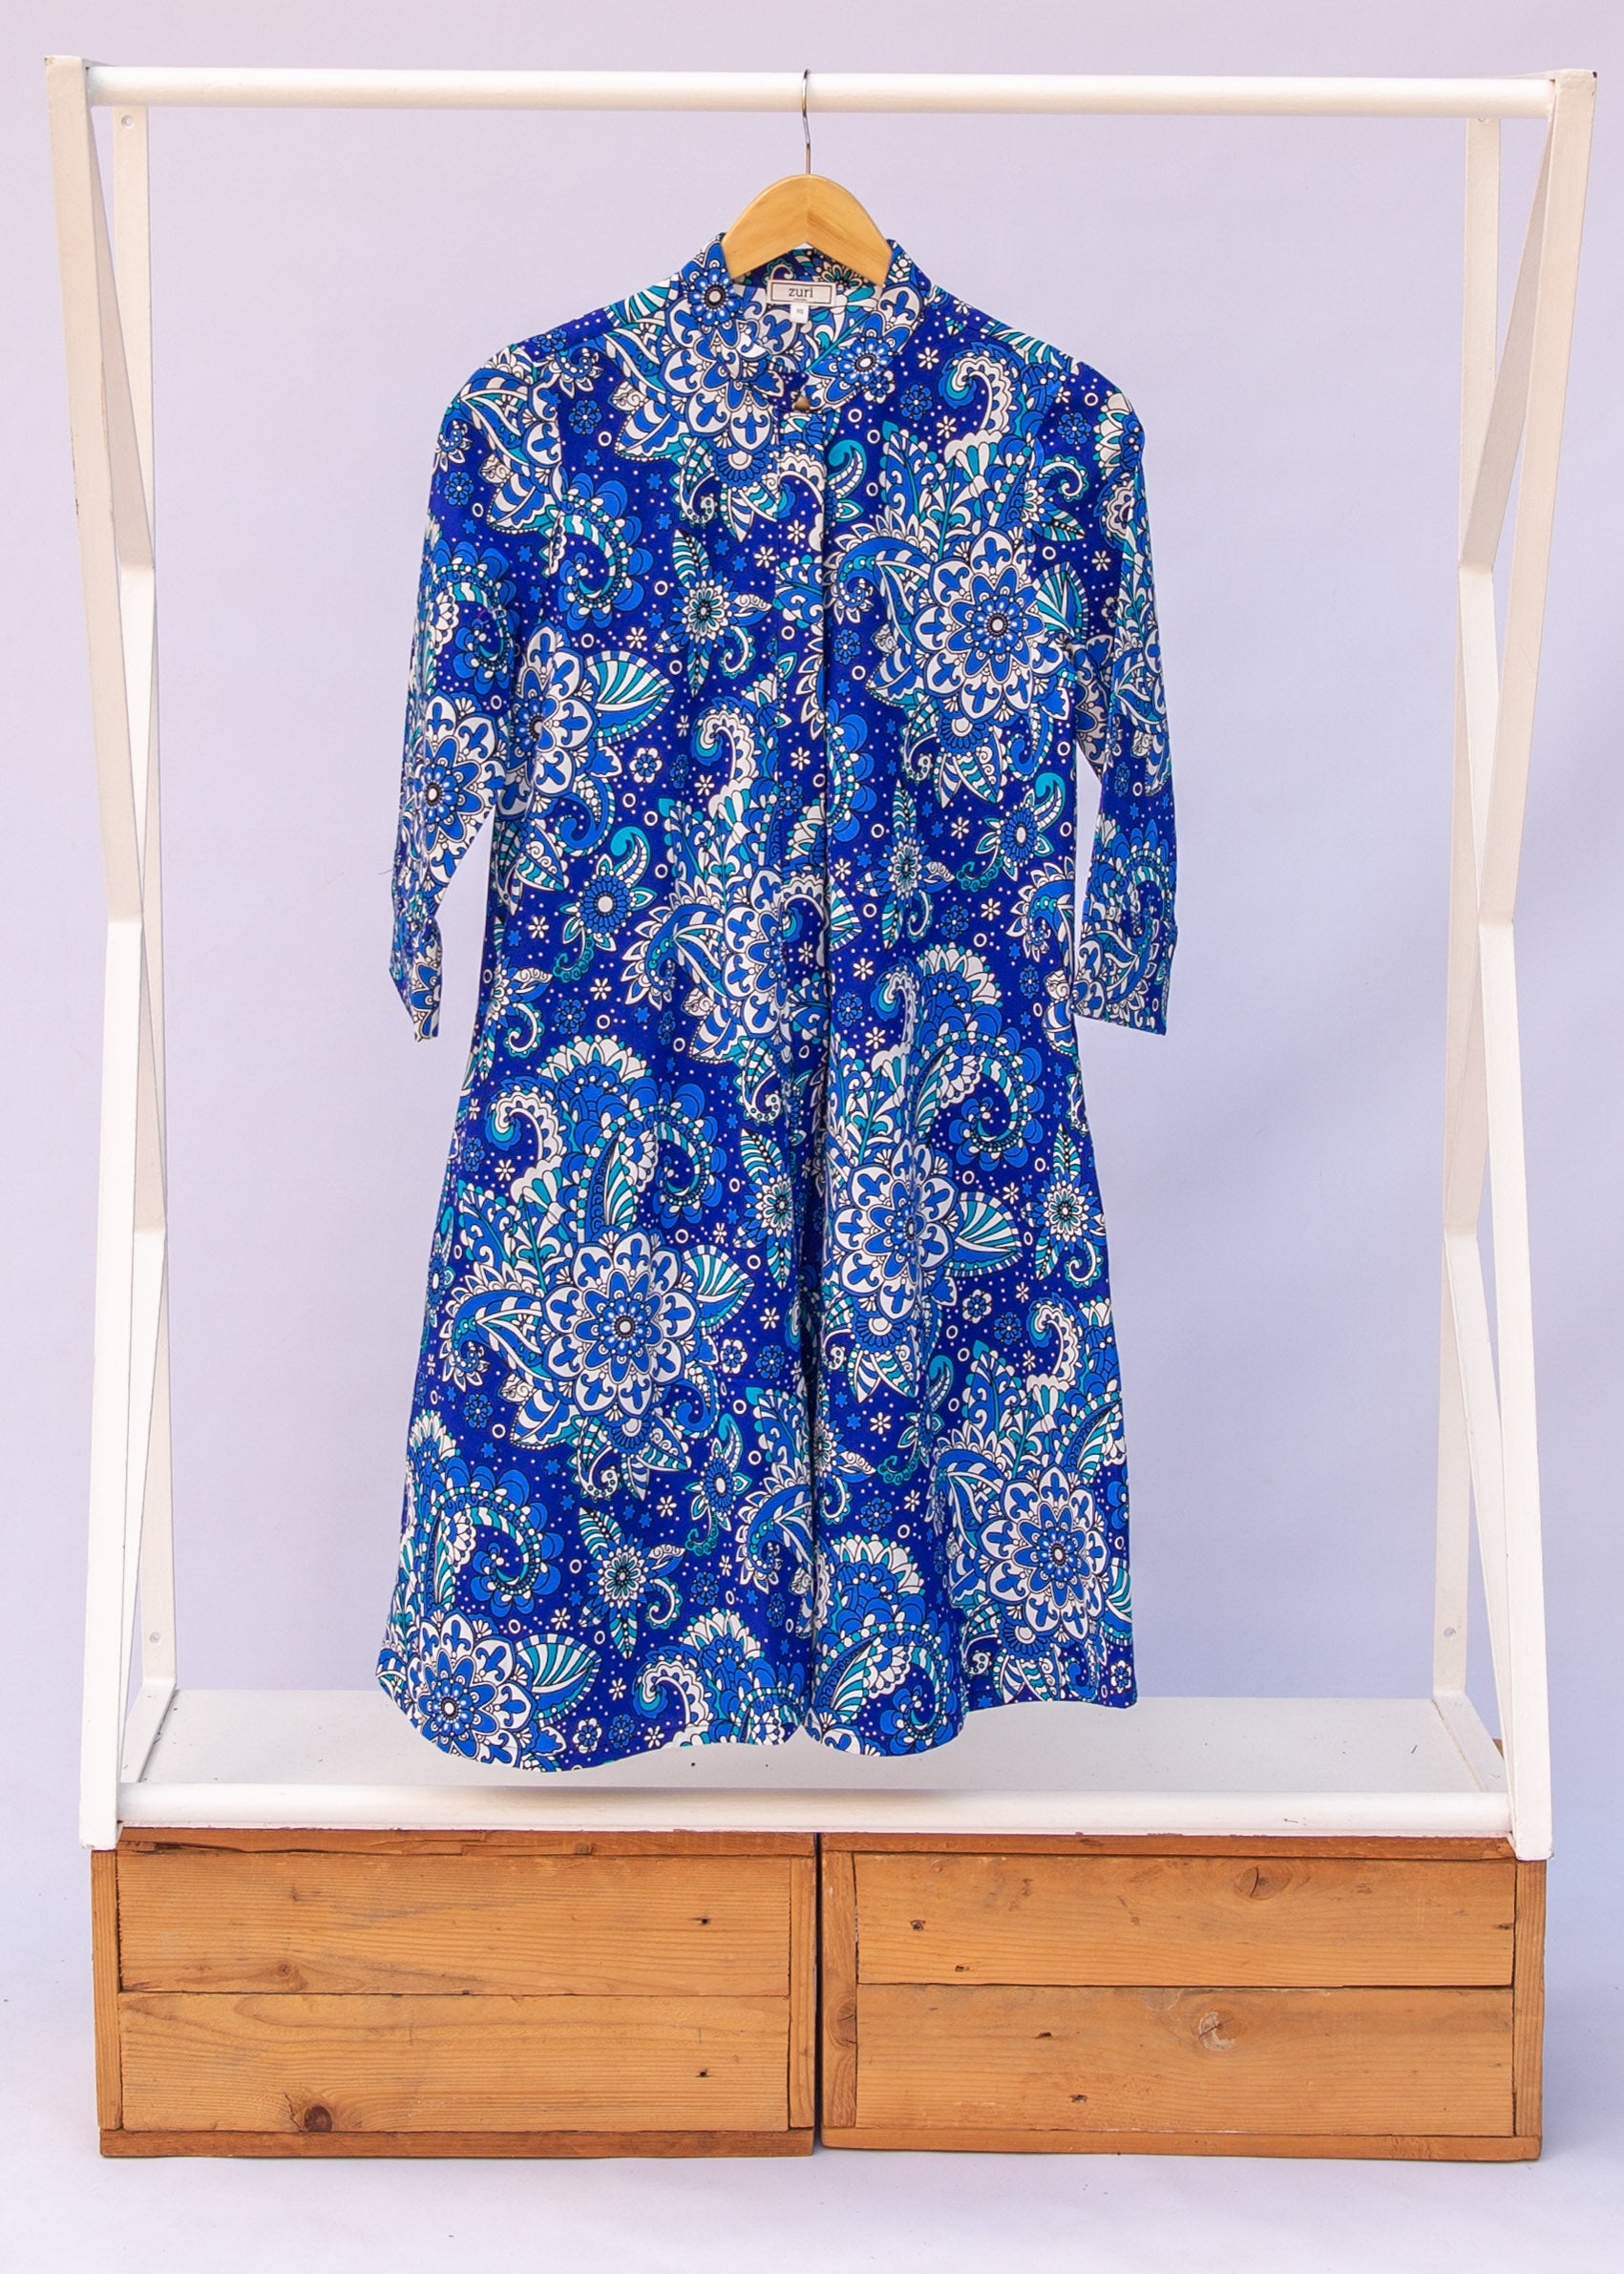 Display of blue paisley dress.